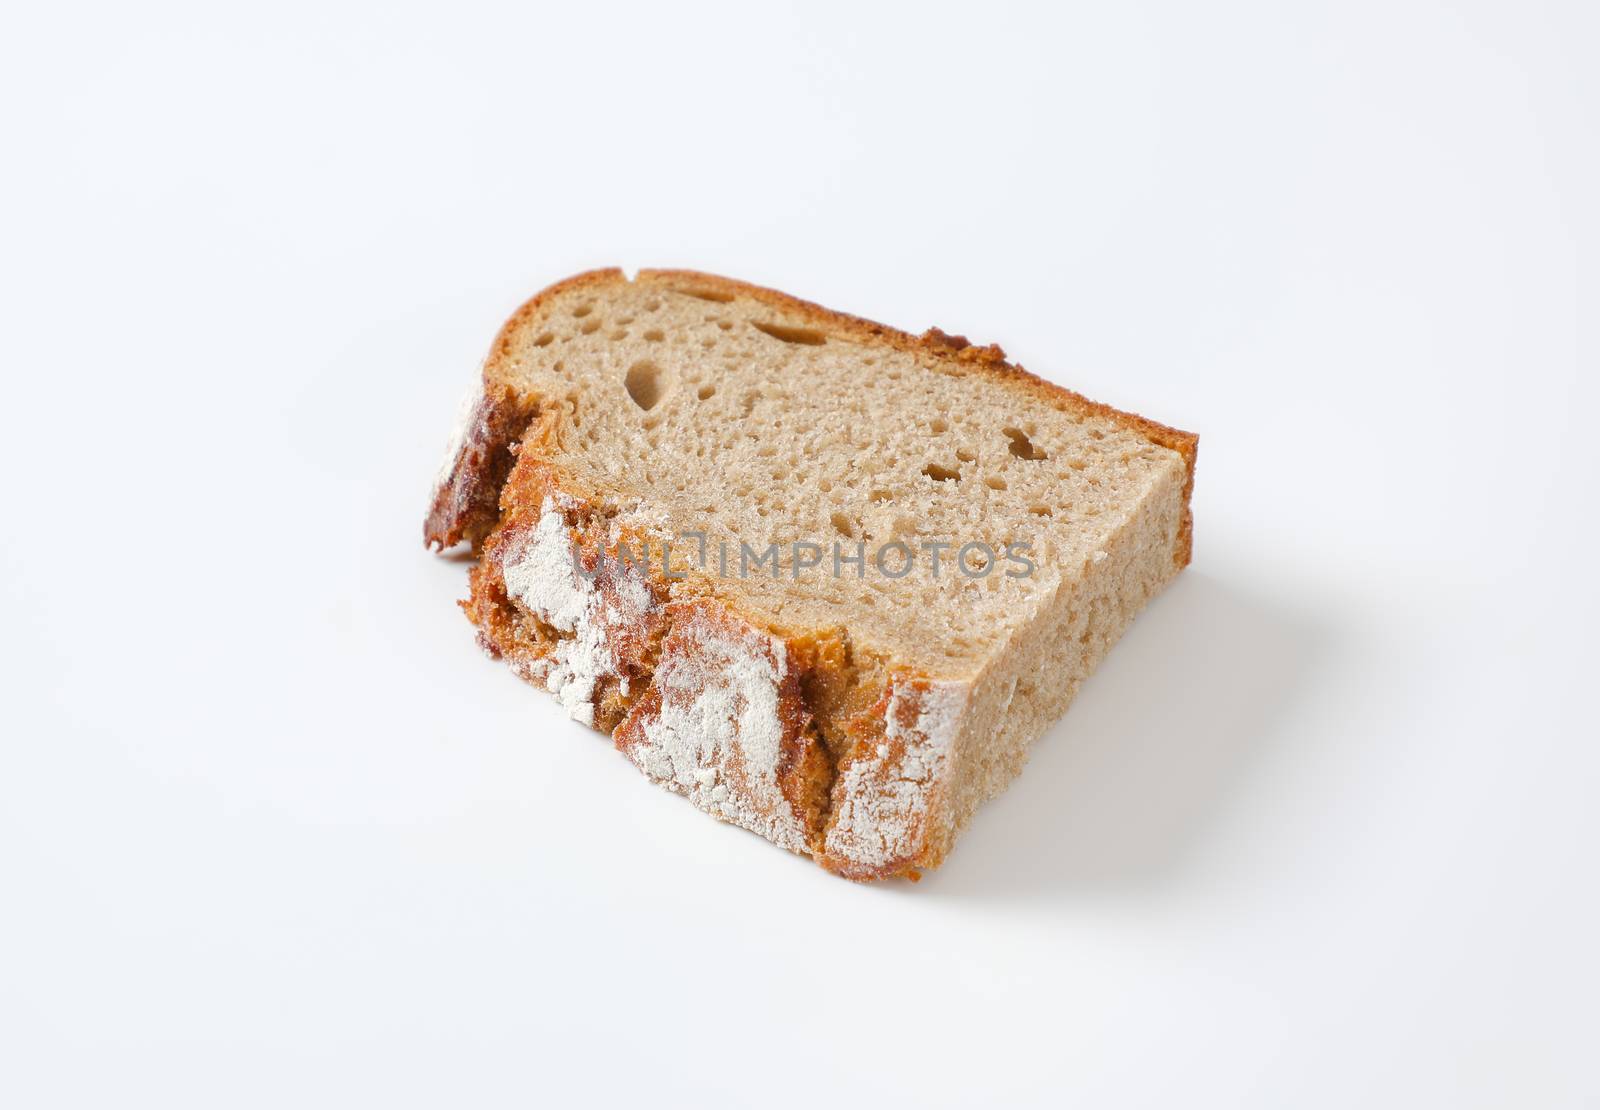 Half a slice of rustic sourdough bread with crispy crust